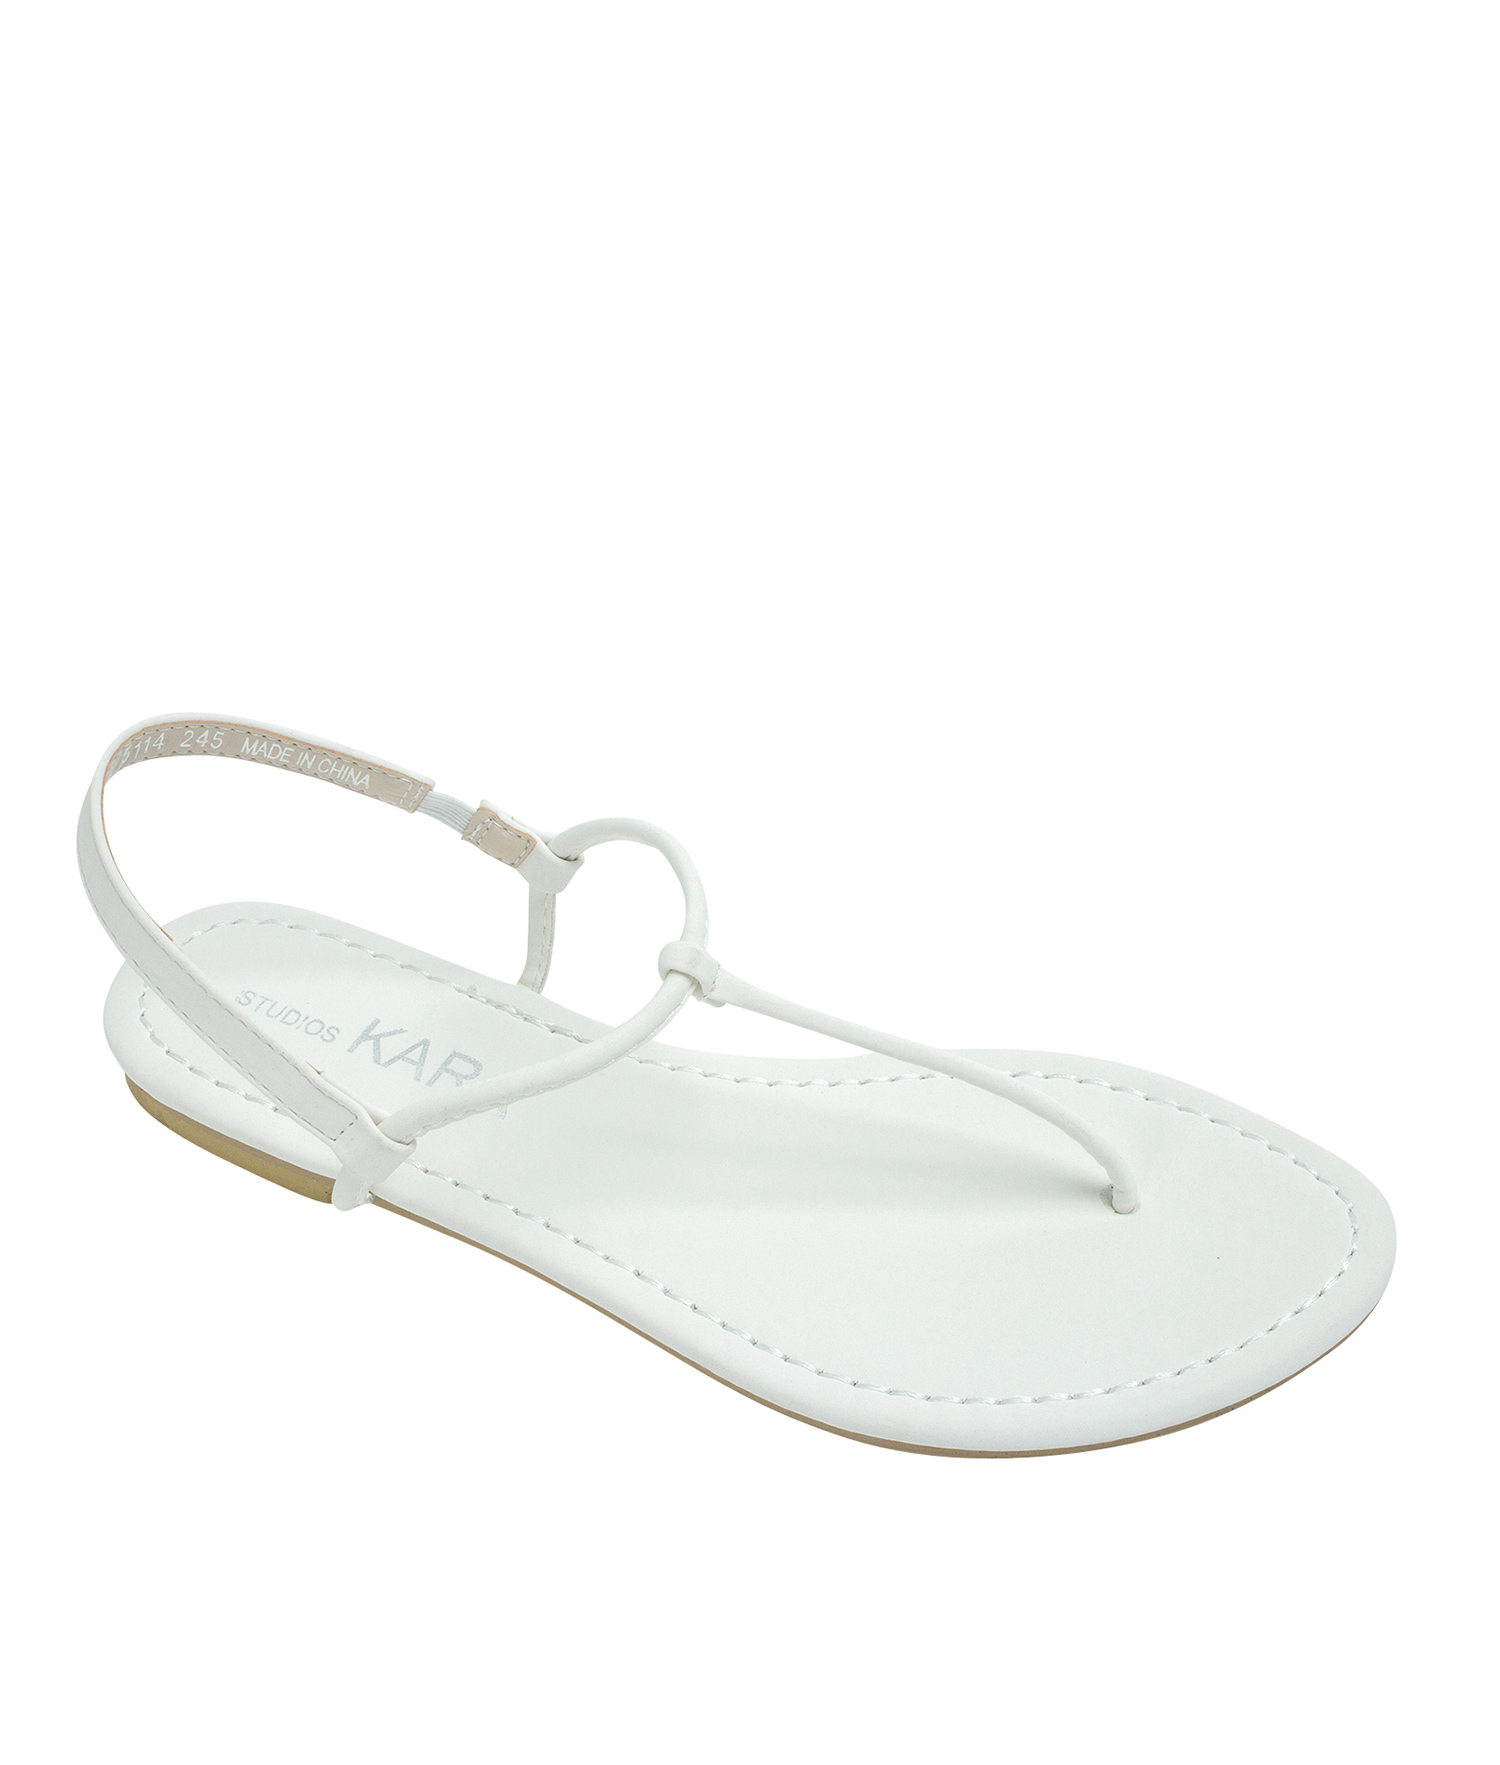 women's white flat sandals